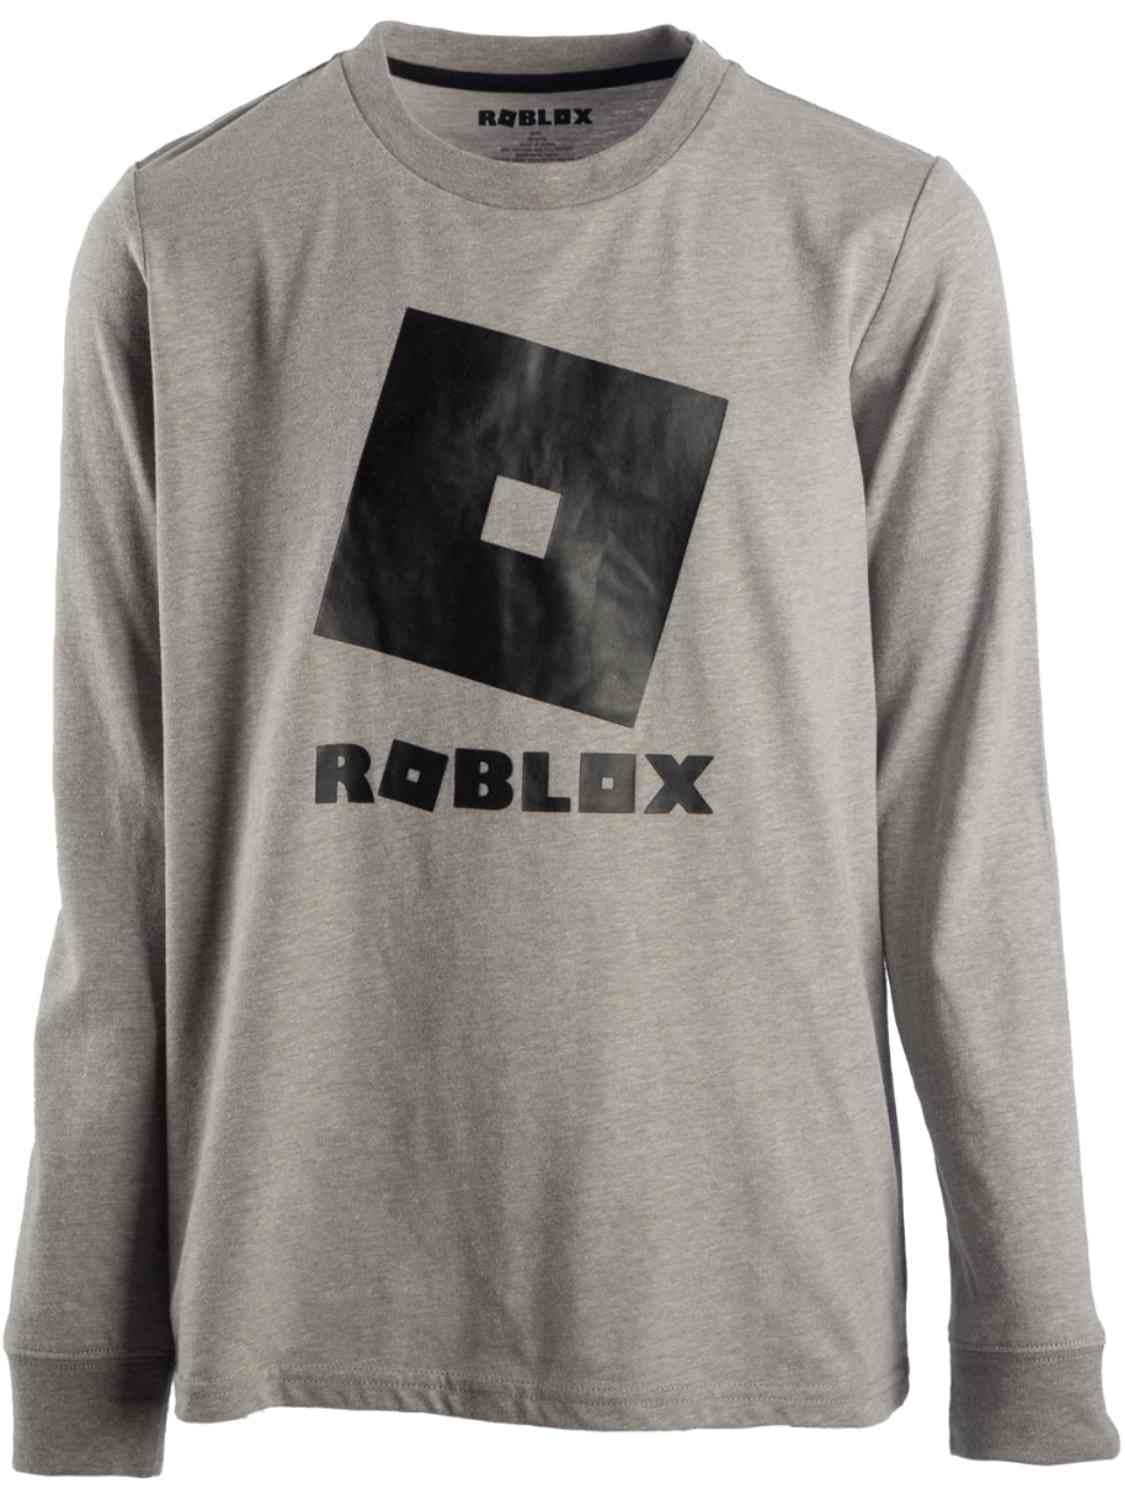 Boys Gray Black Roblox T Shirt Long Sleeve Tee Shirt Walmart Com Walmart Com - long sleeve shirt roblox